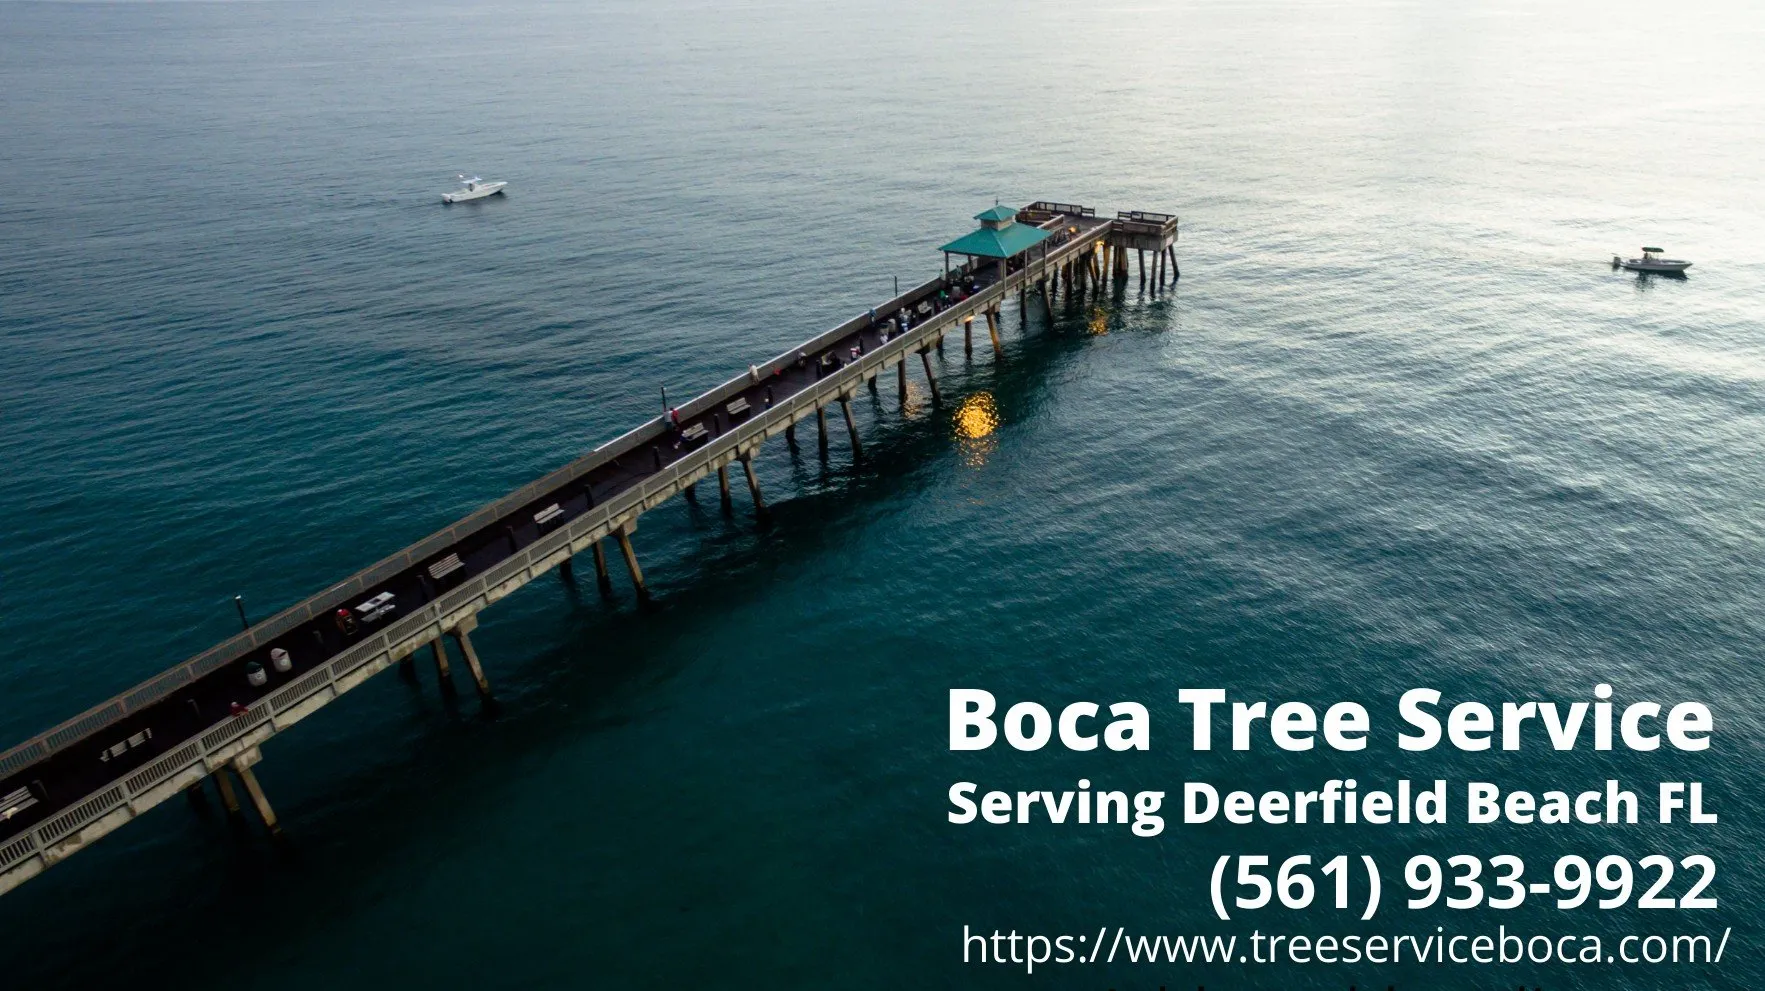 Deerfield beach pier, with text by Boca Tree Service, serving Deerfield Beach FL